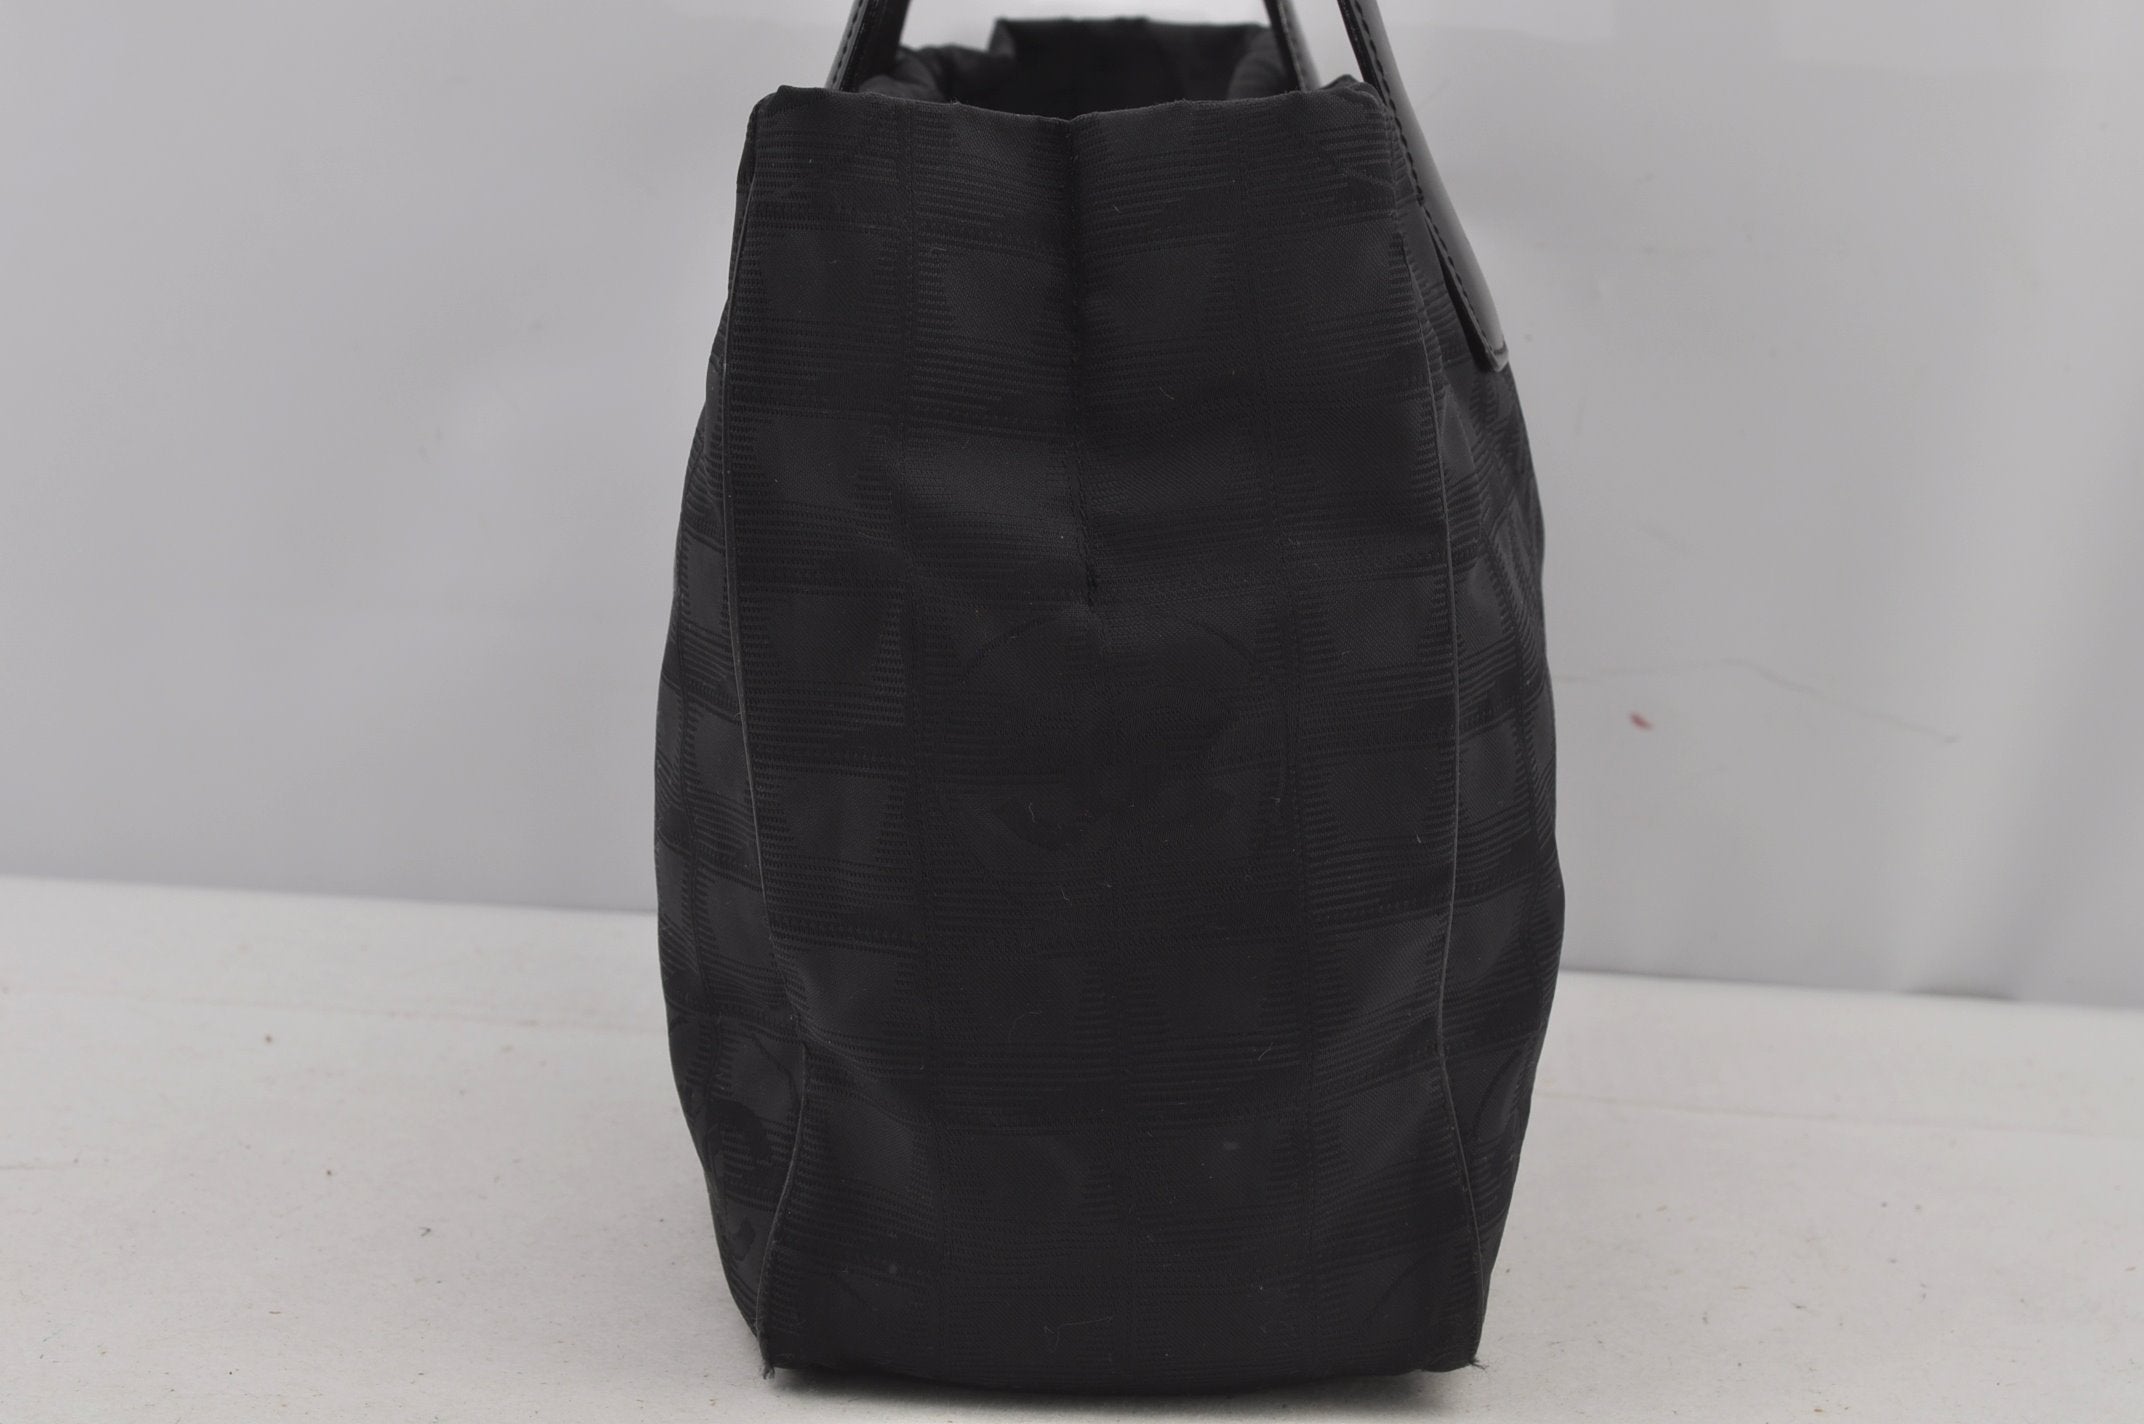 Authentic CHANEL New Travel Line Shoulder Tote Bag Nylon Leather Black 7041J